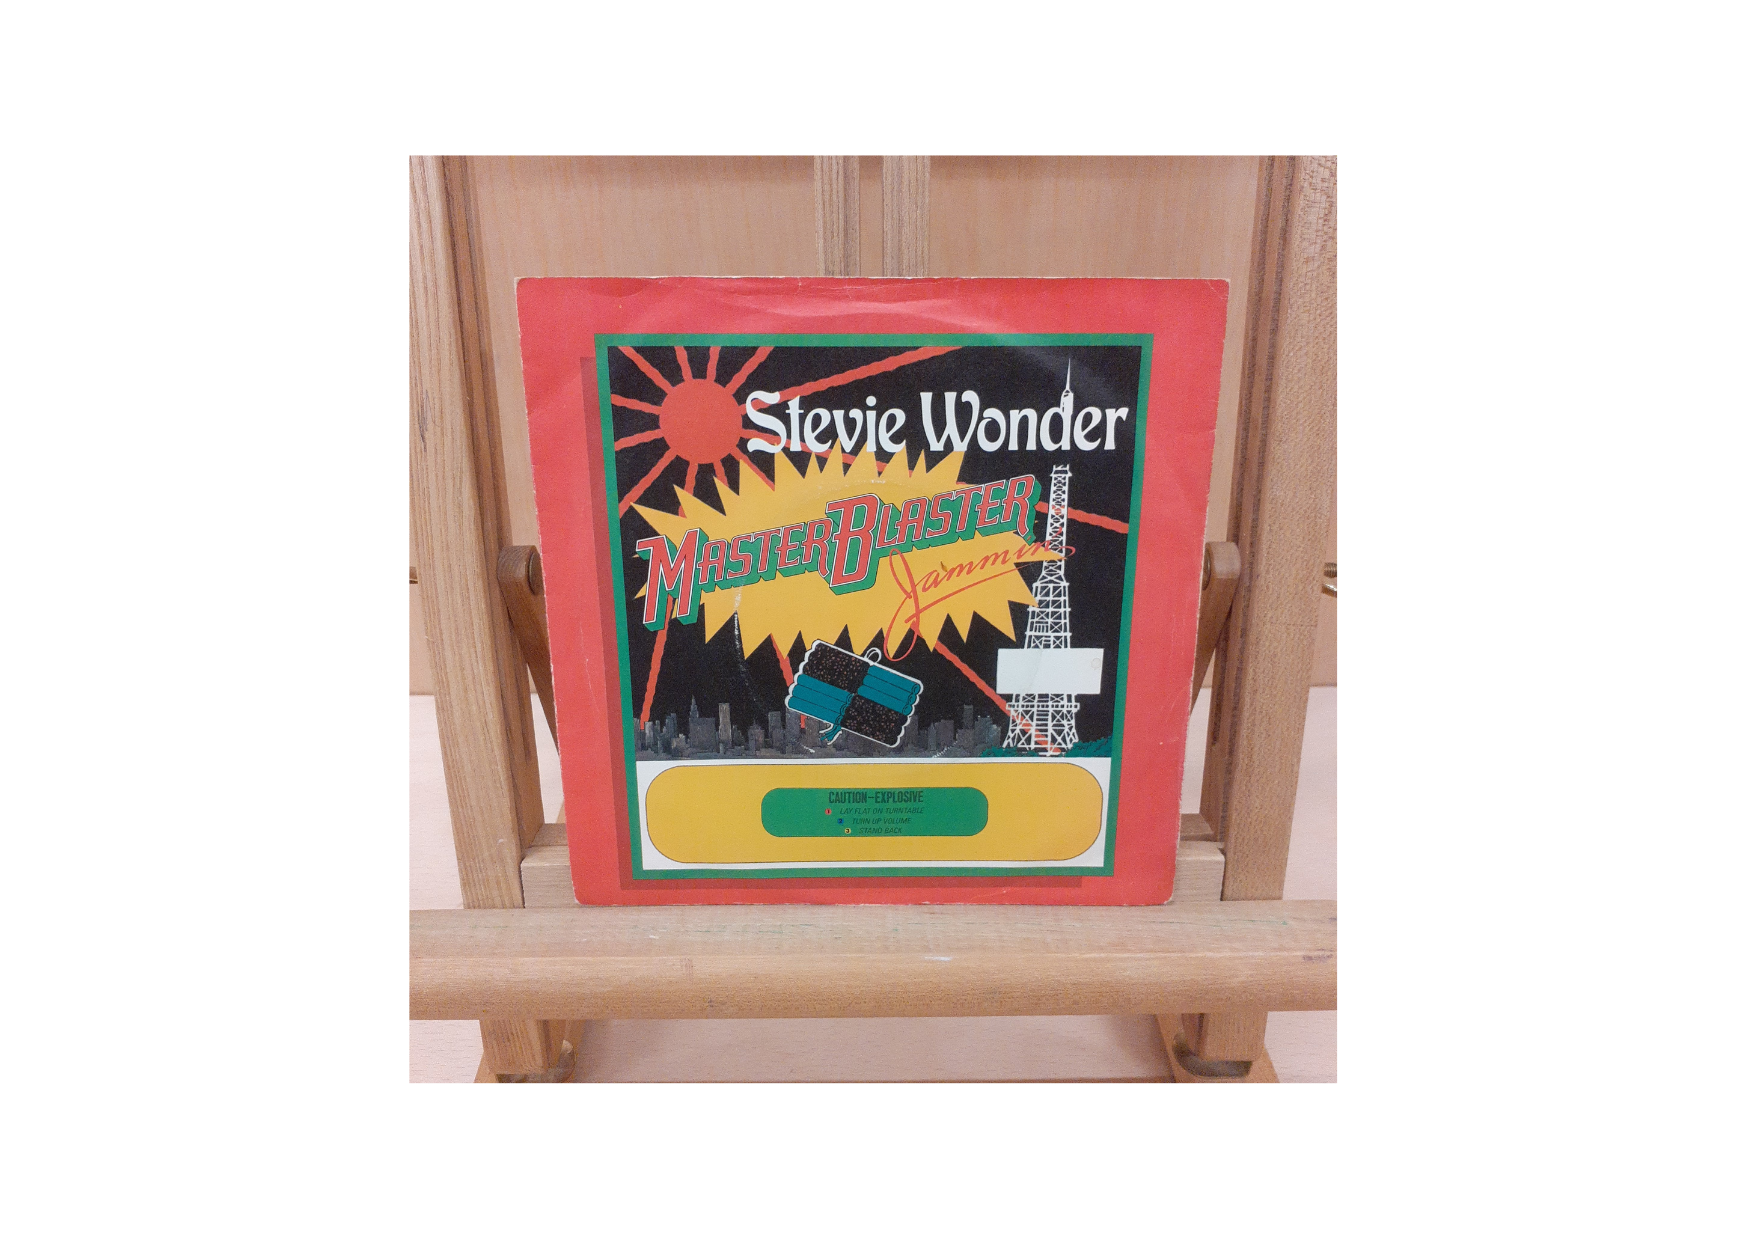 Stevie Wonder Master Blaster / Jammin' Front View 7" Single